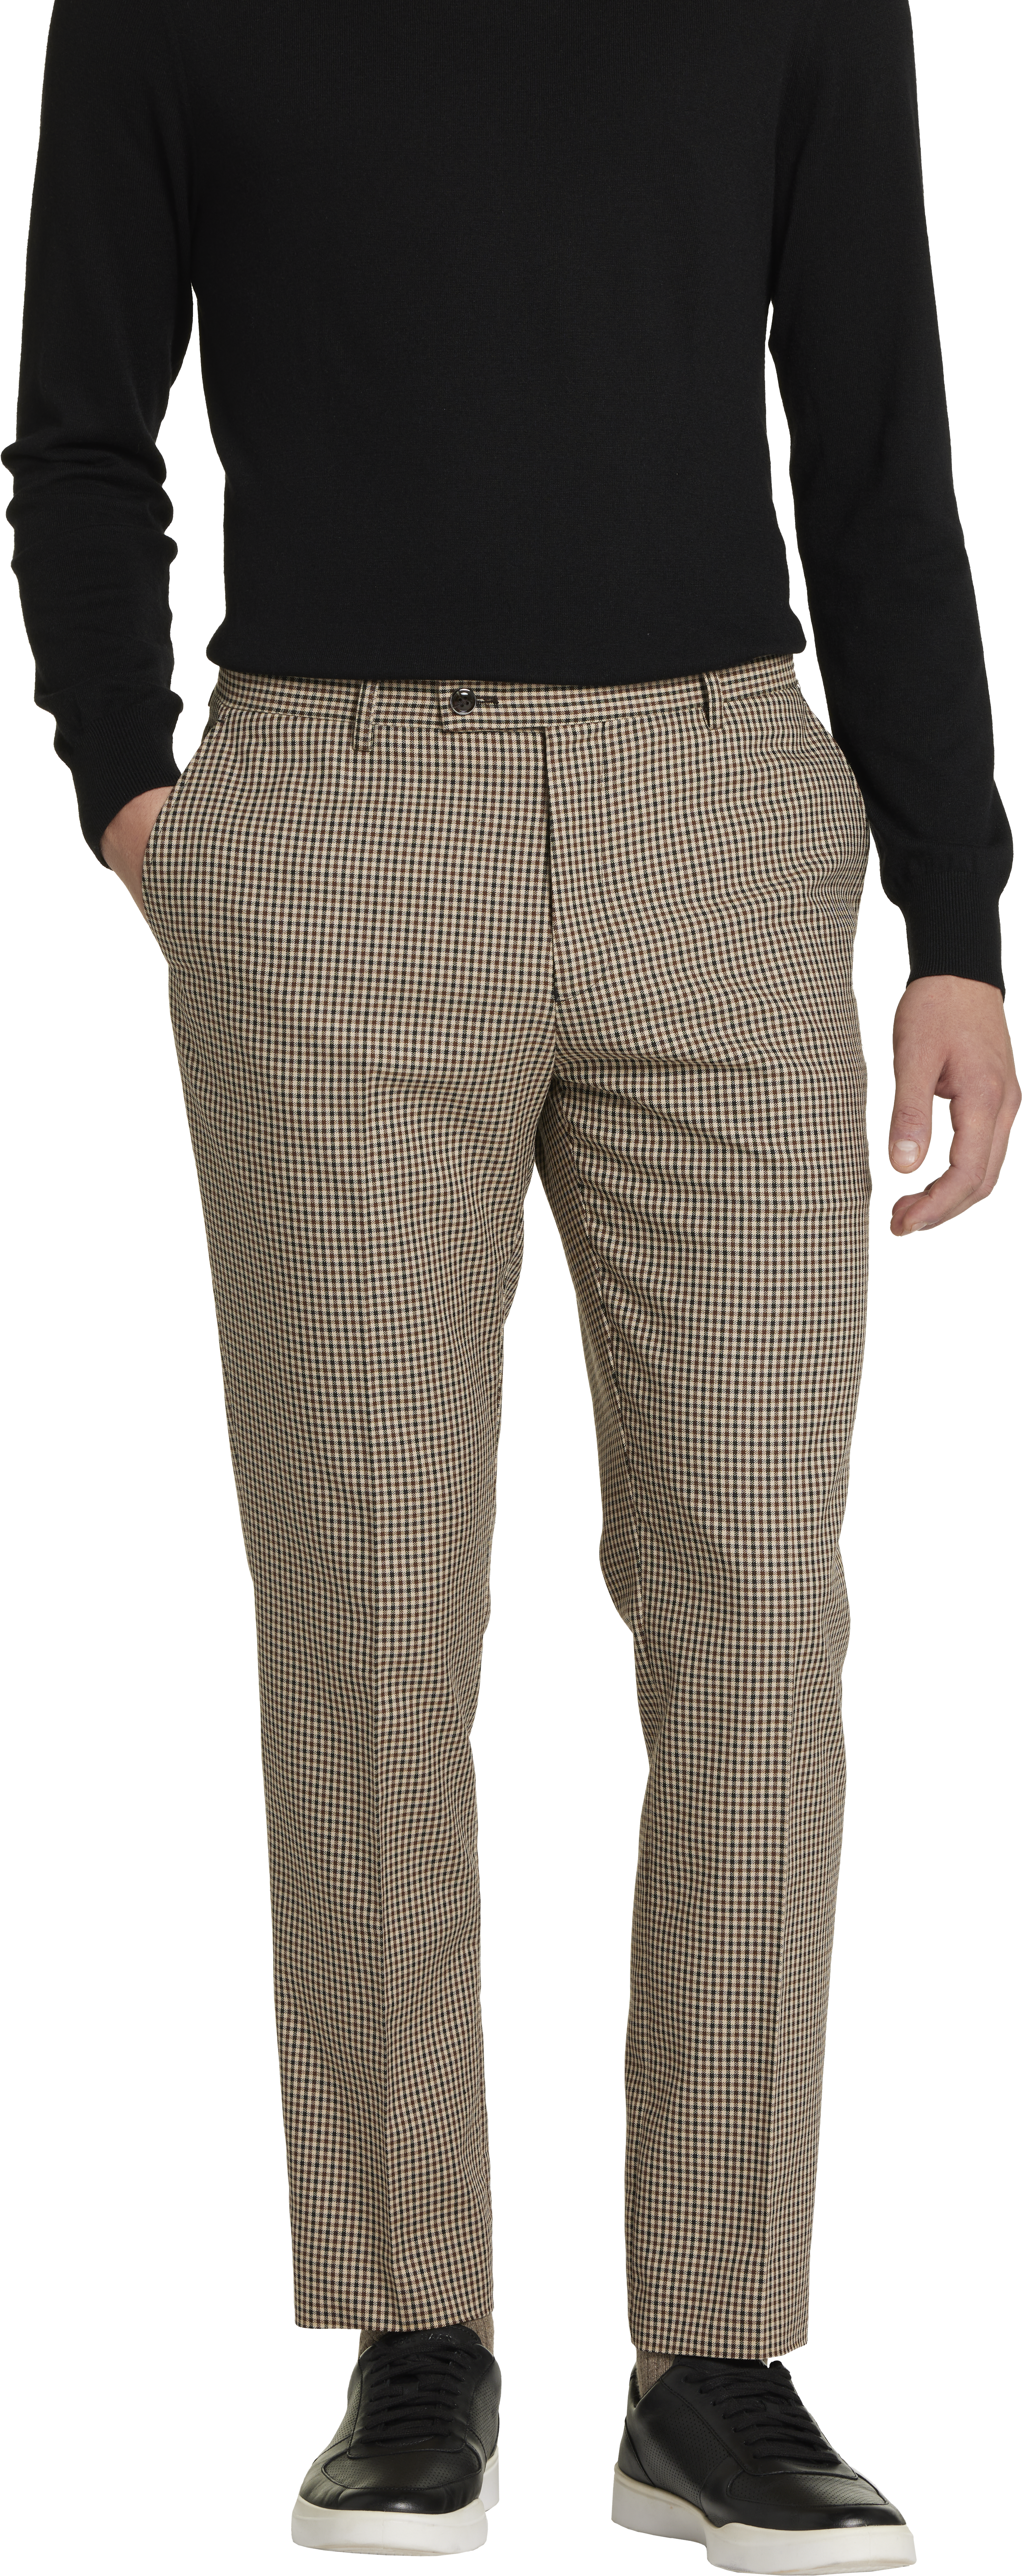 Slim Fit Gingham Suit Separates Pants